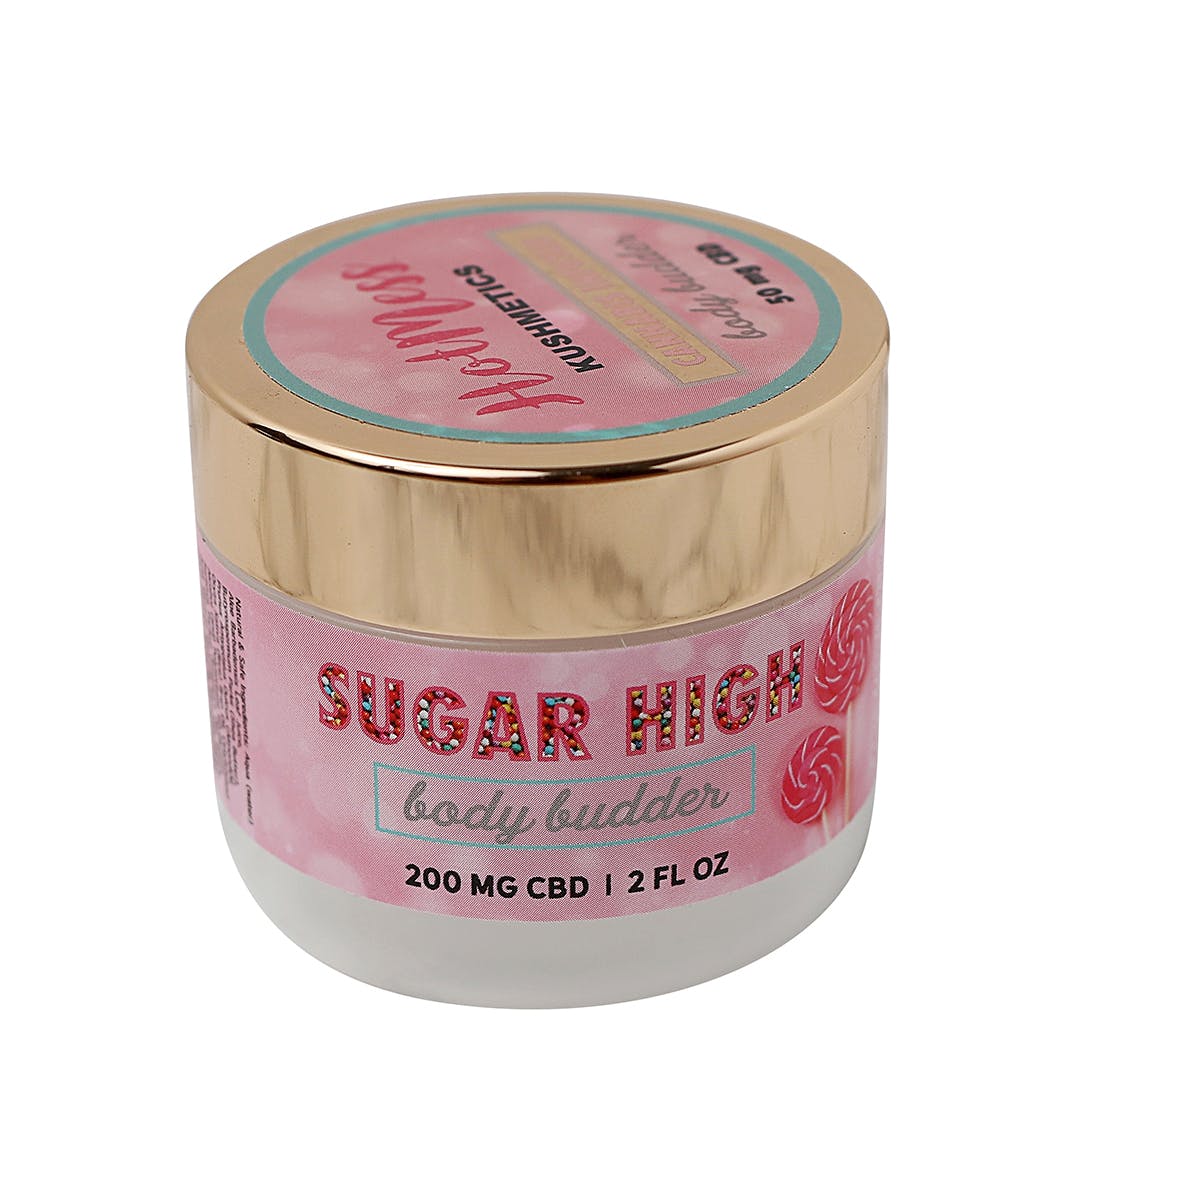 Sugar High Body Budder, 2 oz / 200 mg CBD